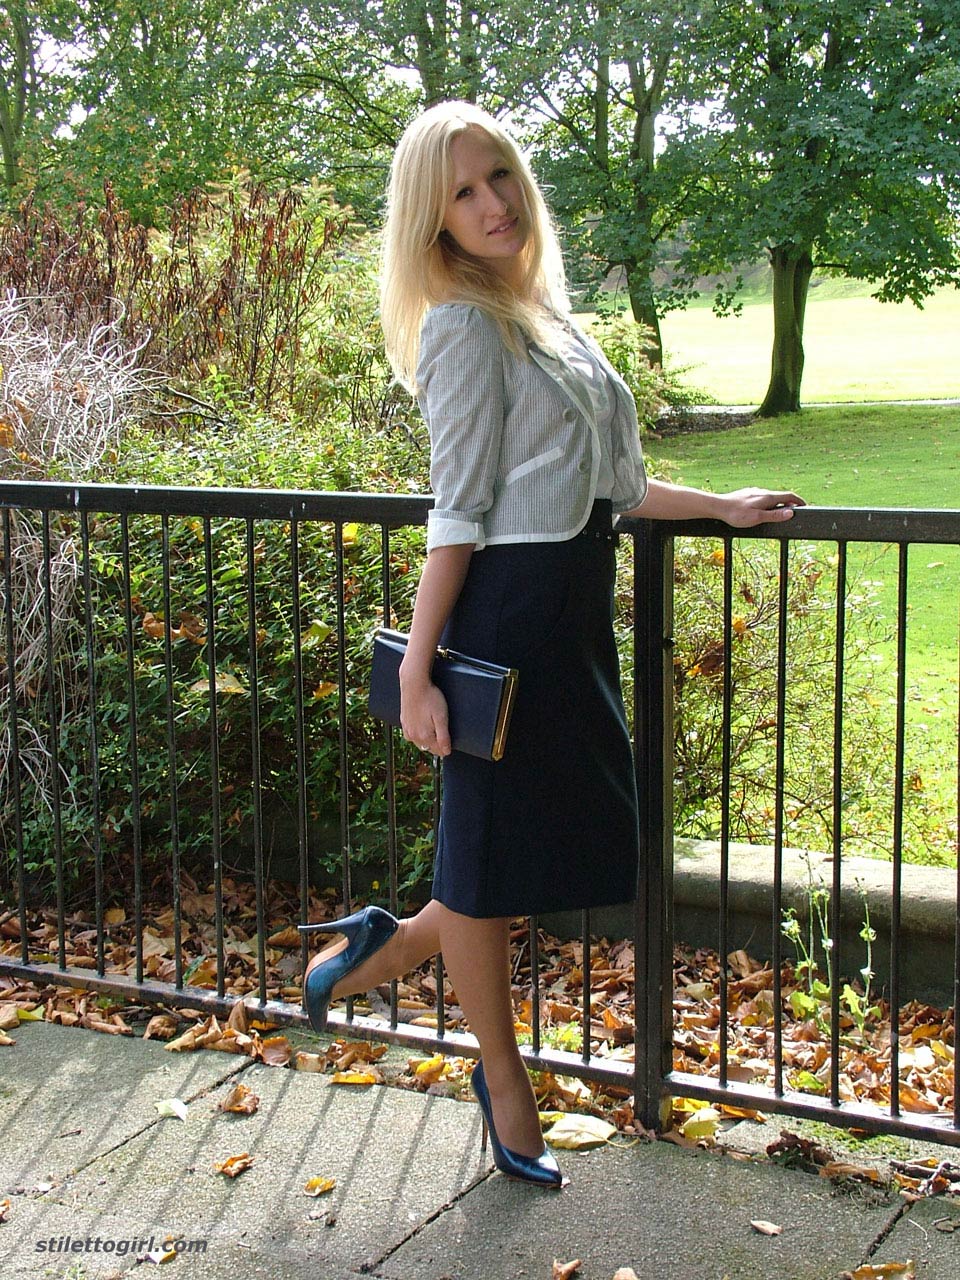 teen secretary in high heels and nylons